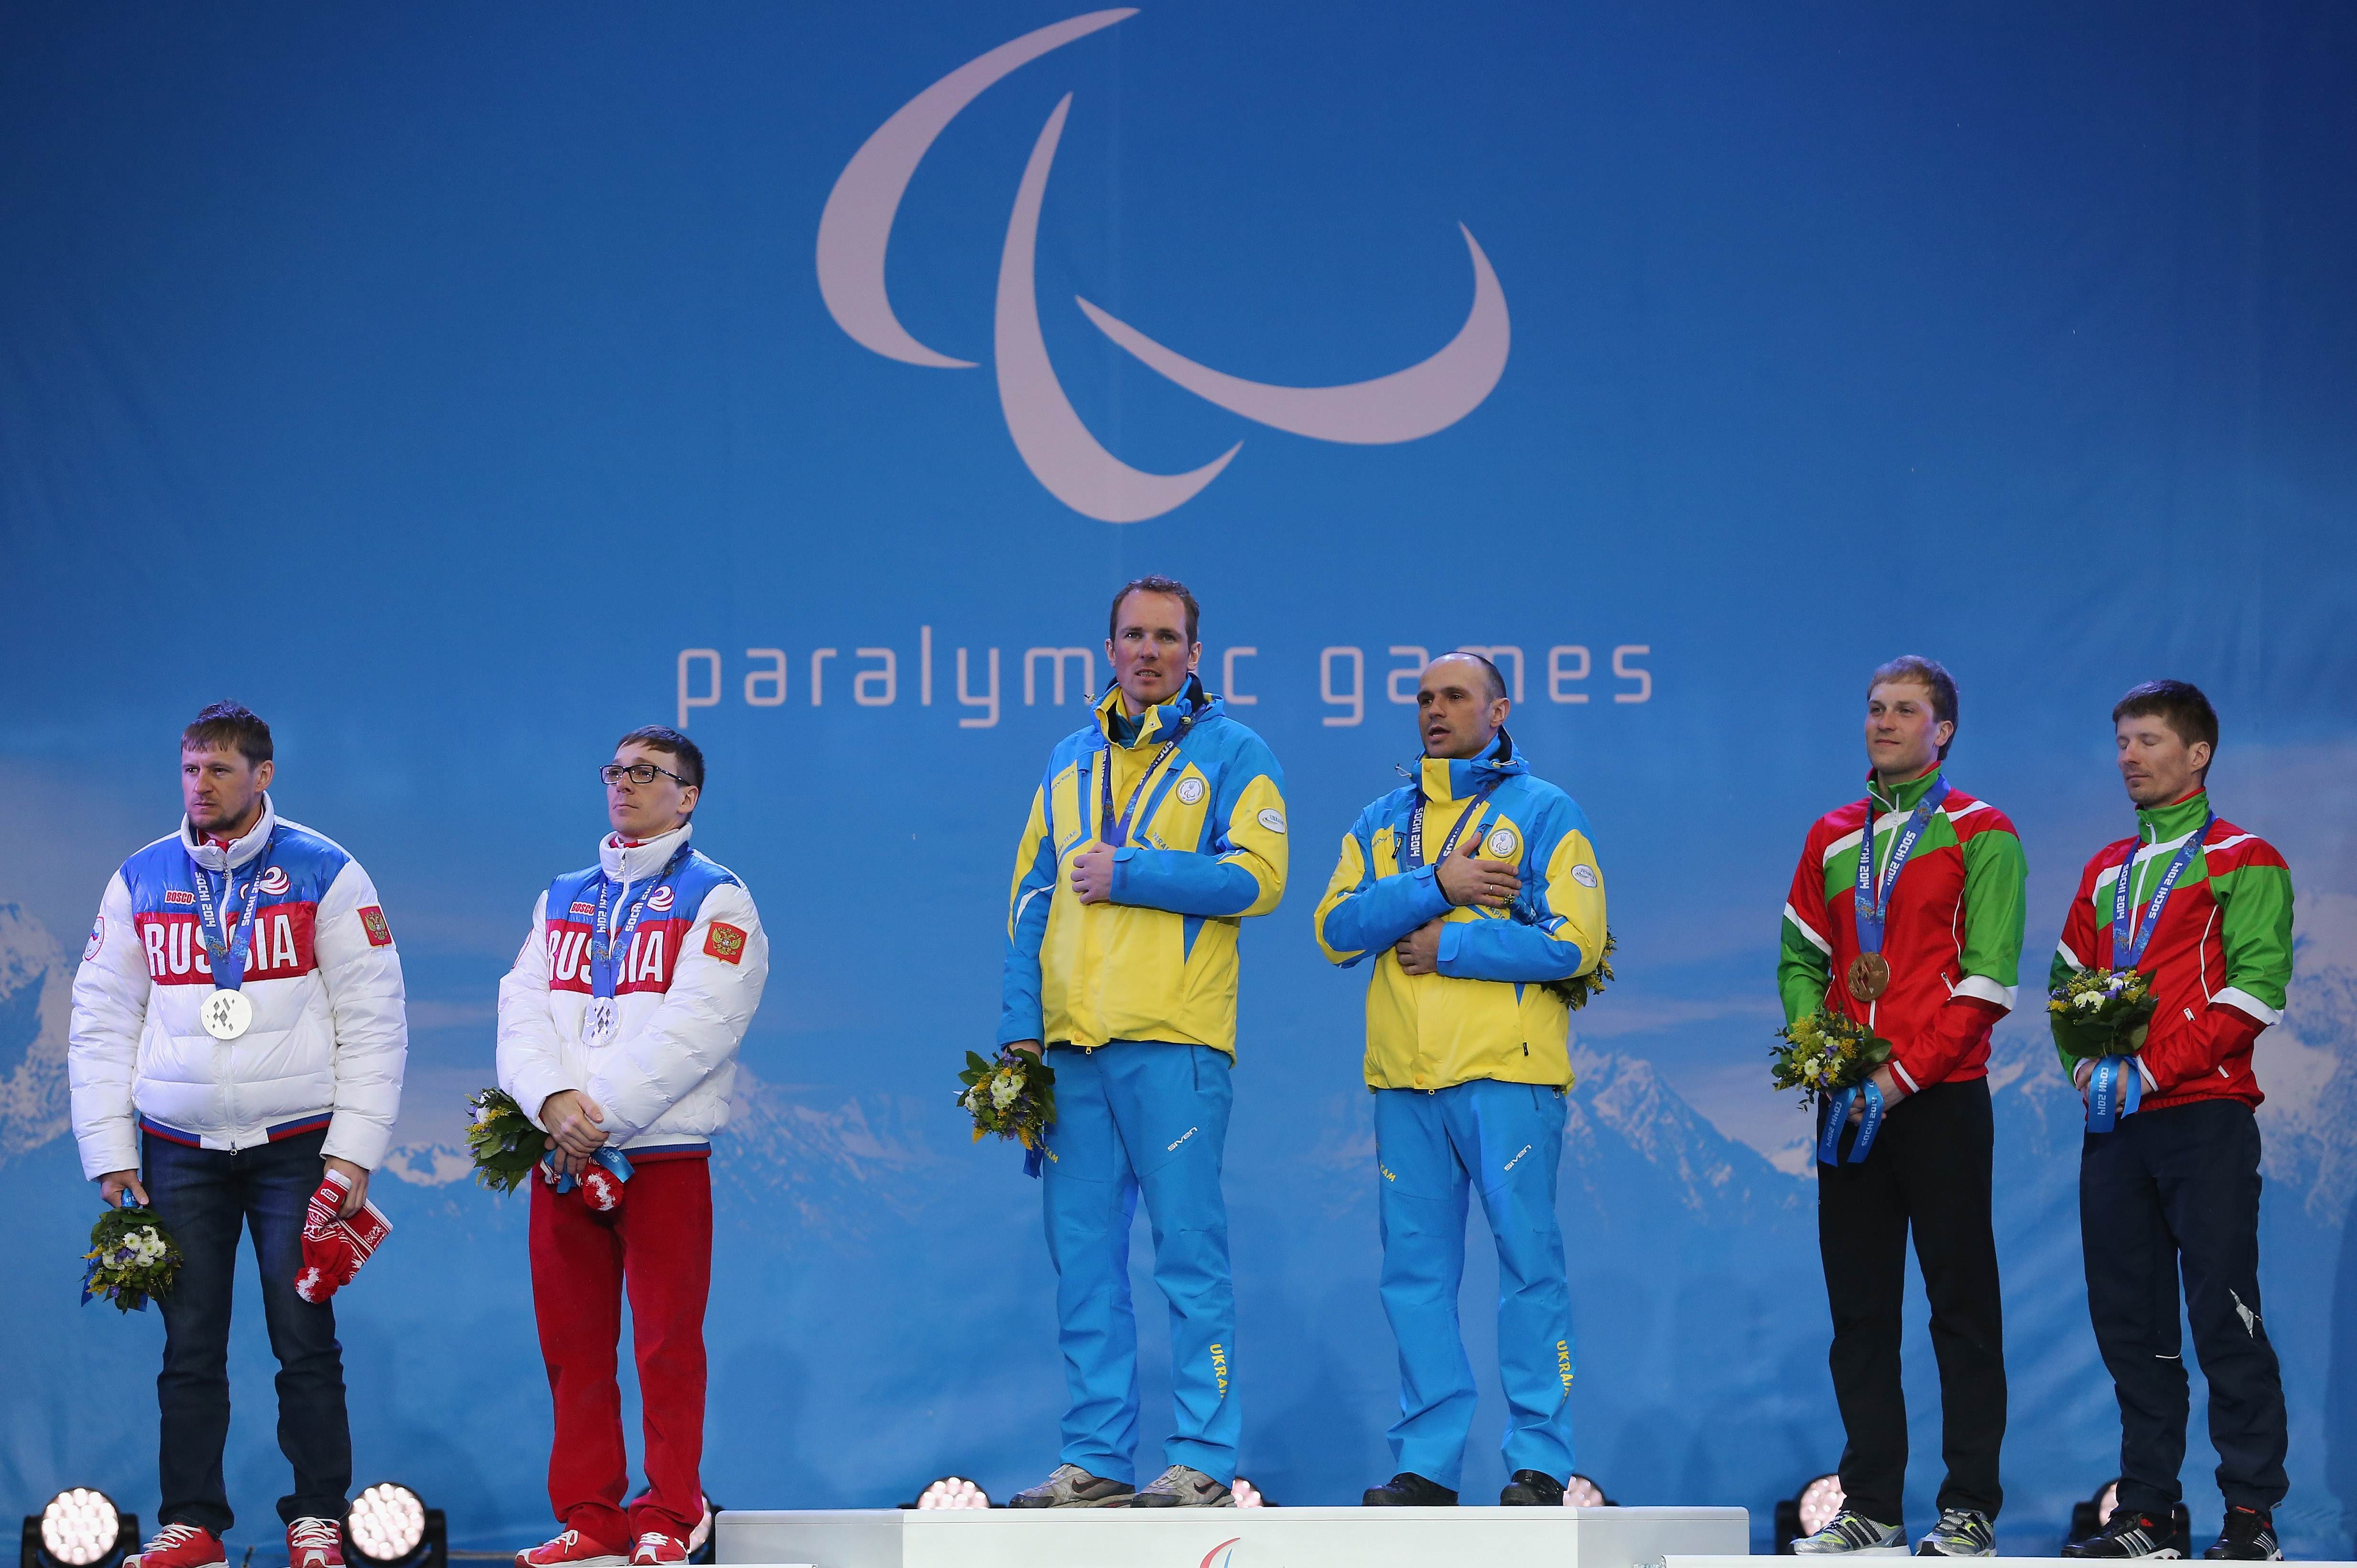 Украинский паралимпиец Виталий Лукьяненко и его гид Борис Бабар во время церемонии награждения на Паралимпиаде в Сочи